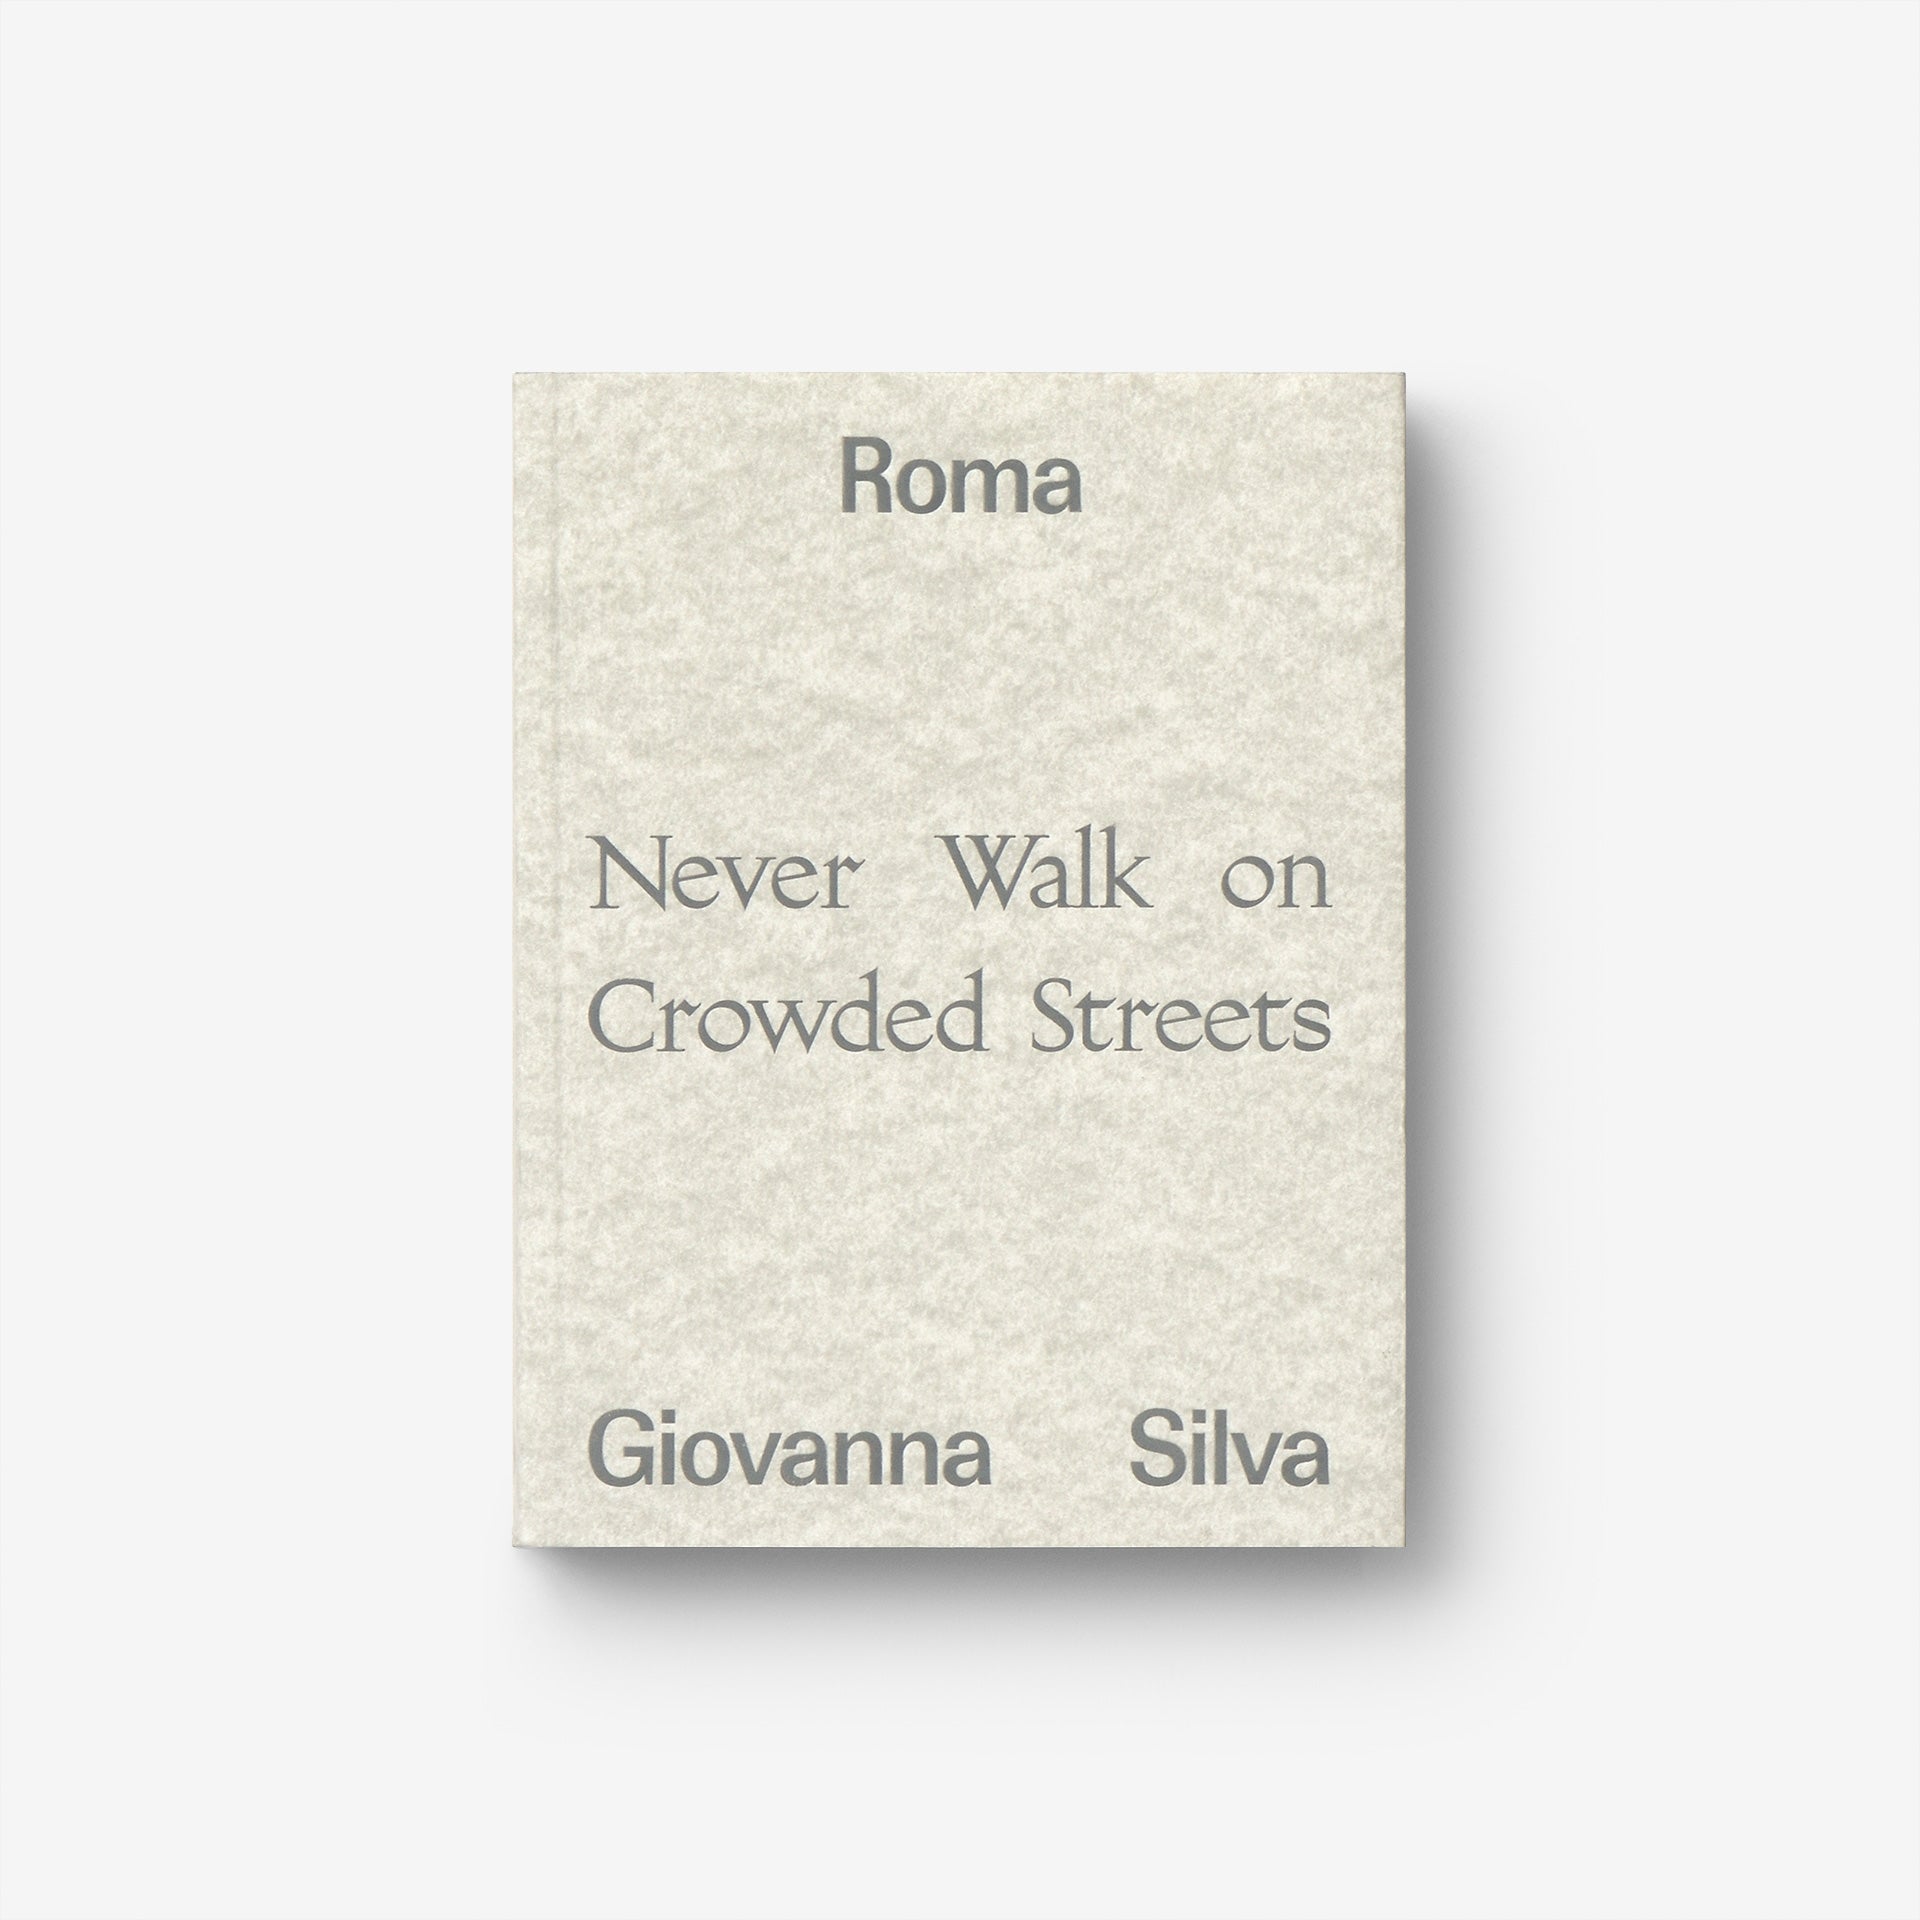 Giovanna Silva: Roma. Never Walk on Crowded Streets